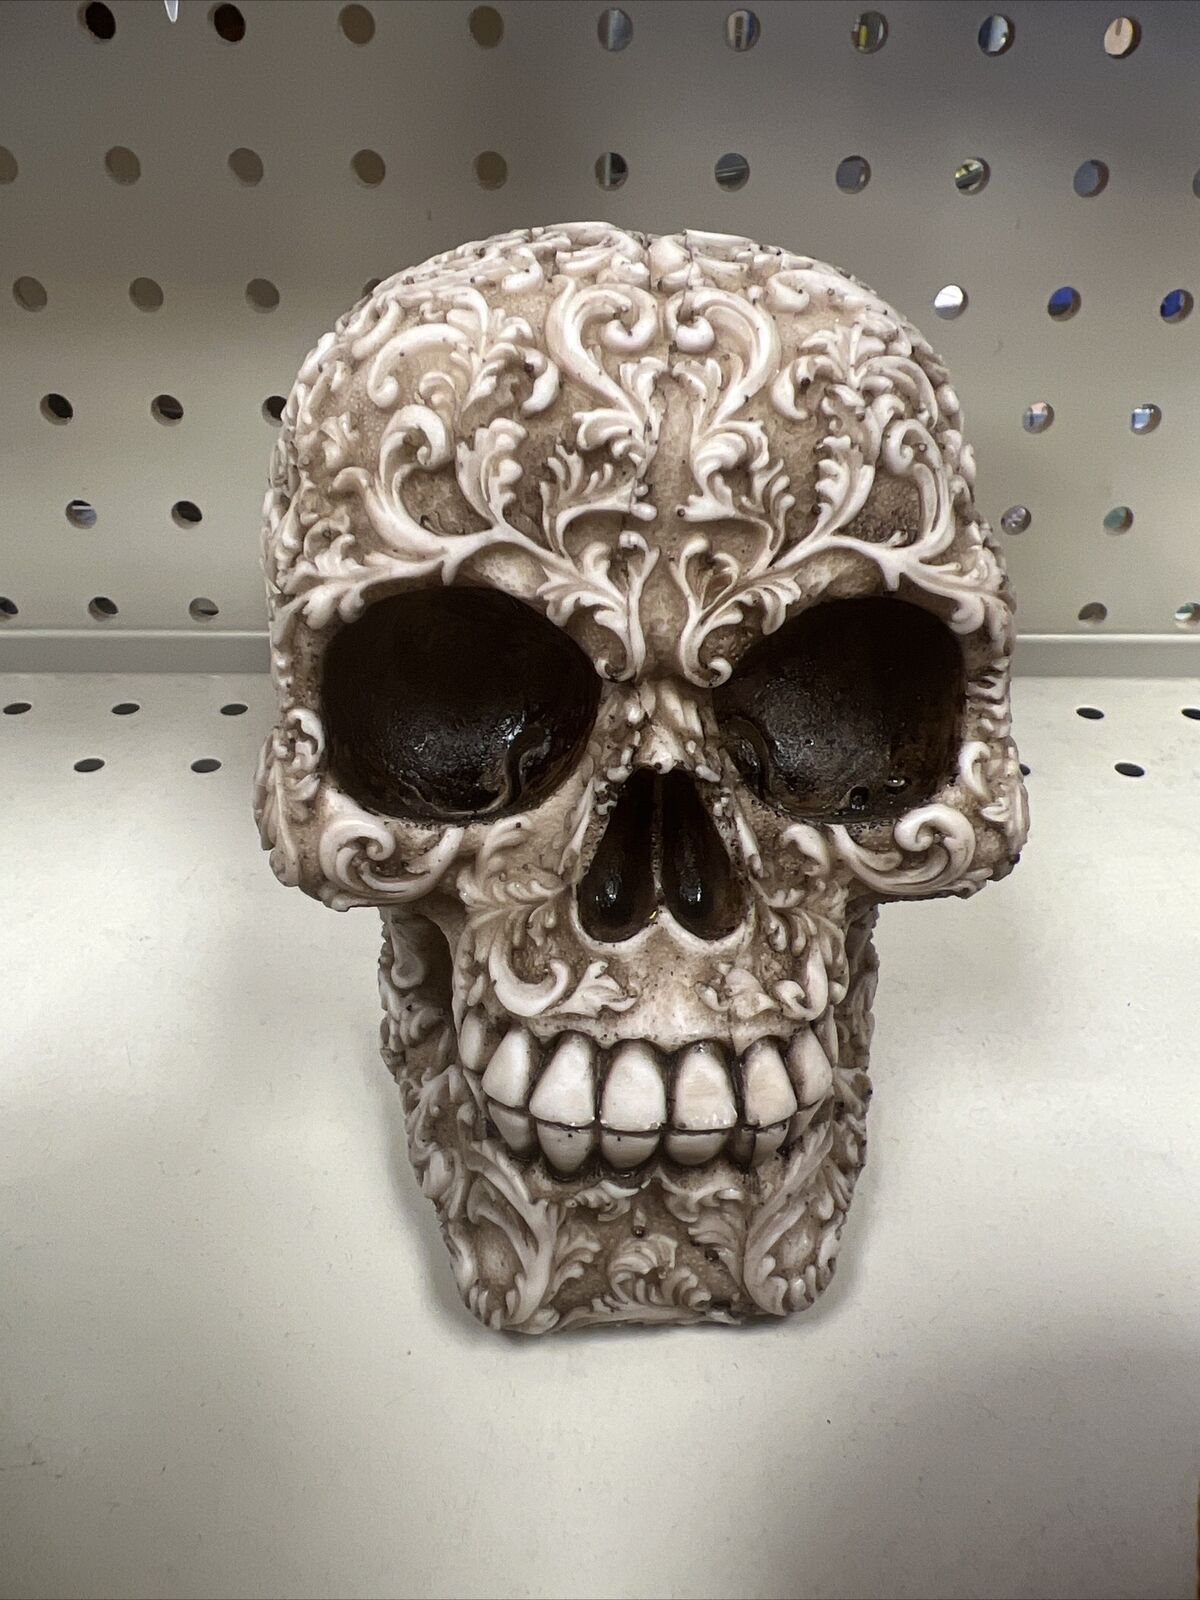 MagiDeal Lifesize Human Skull Resin Replica